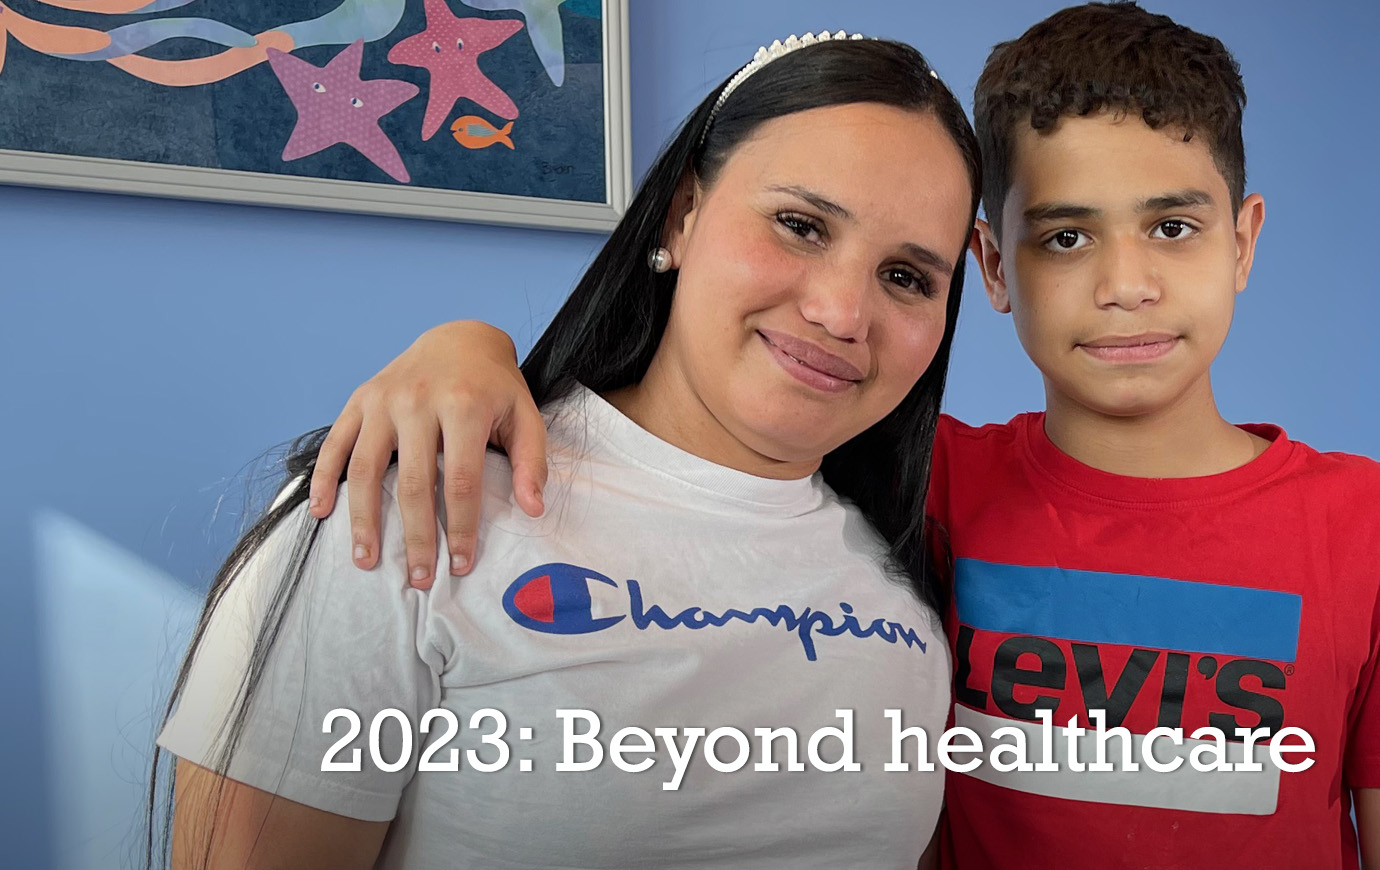 2023: Beyond healthcare